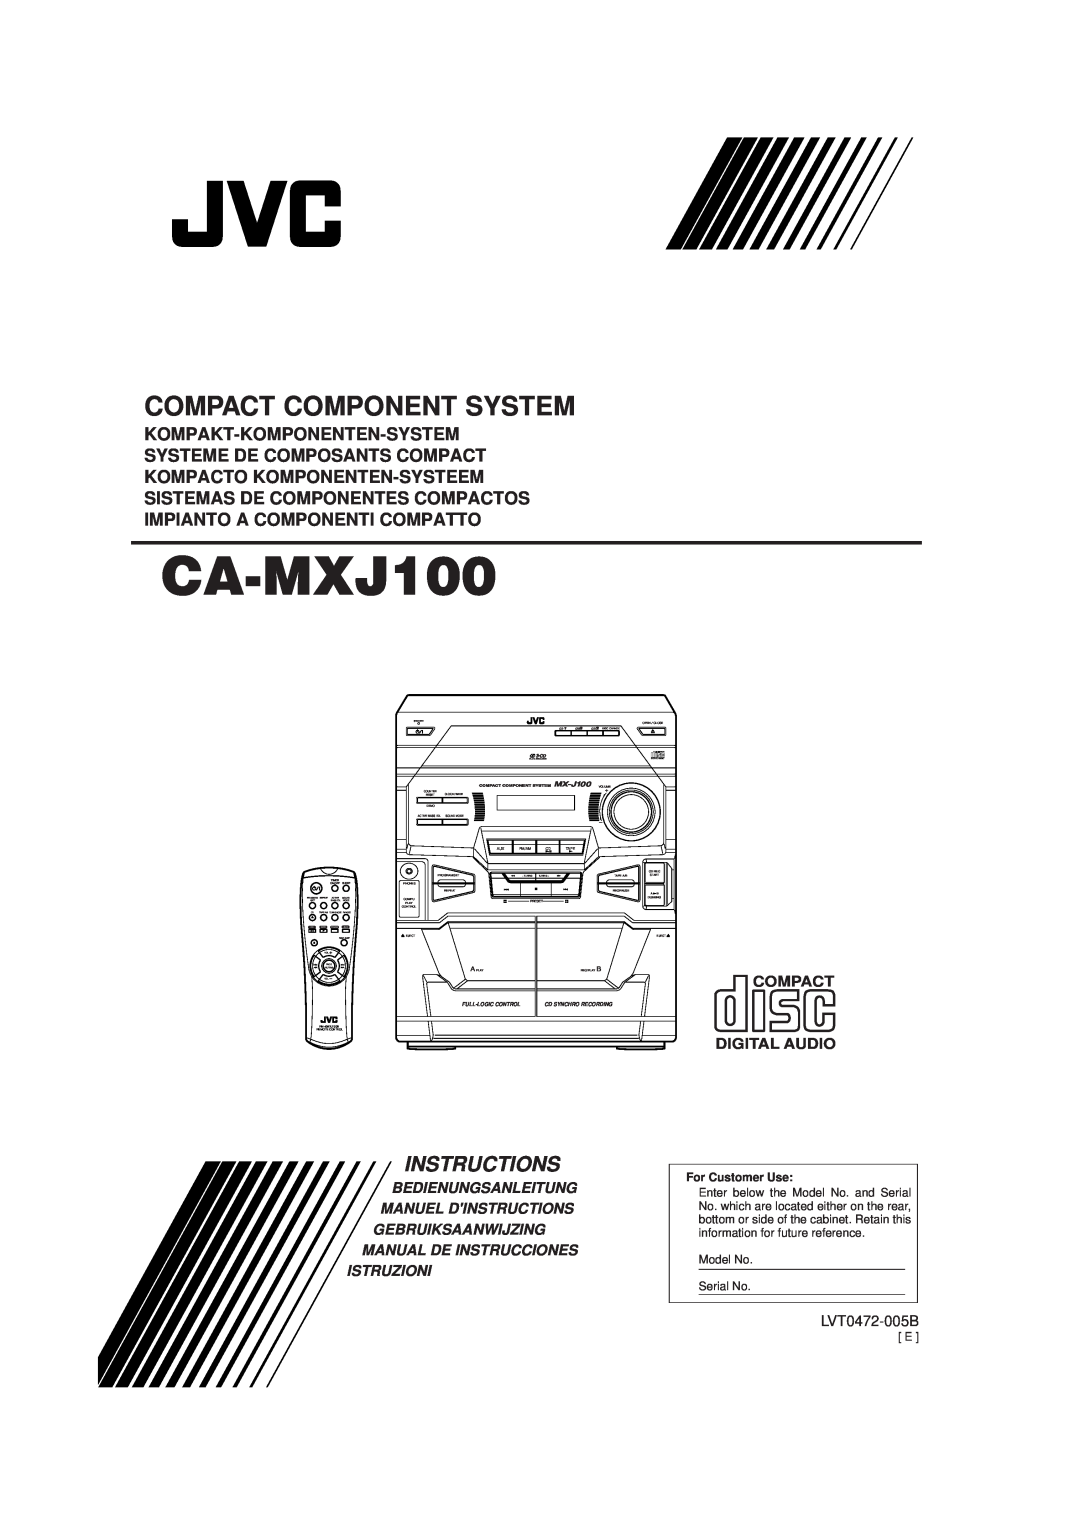 JVC CA-MXJ100 manual Kompakt-Komponenten-System, Systeme De Composants Compact, Kompacto Komponenten-Systeem, Instructions 